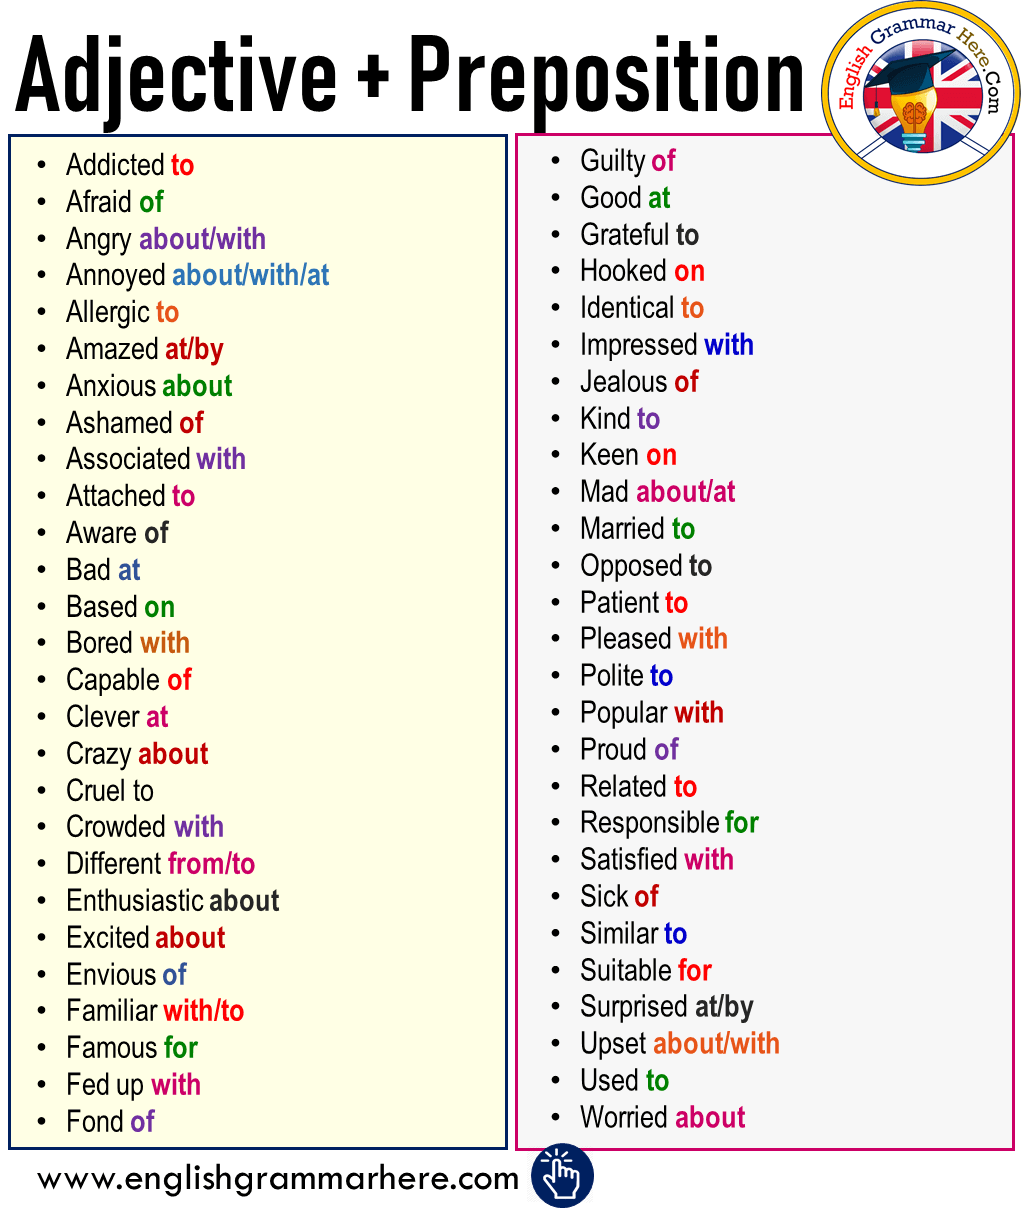 Adjective + Preposition List